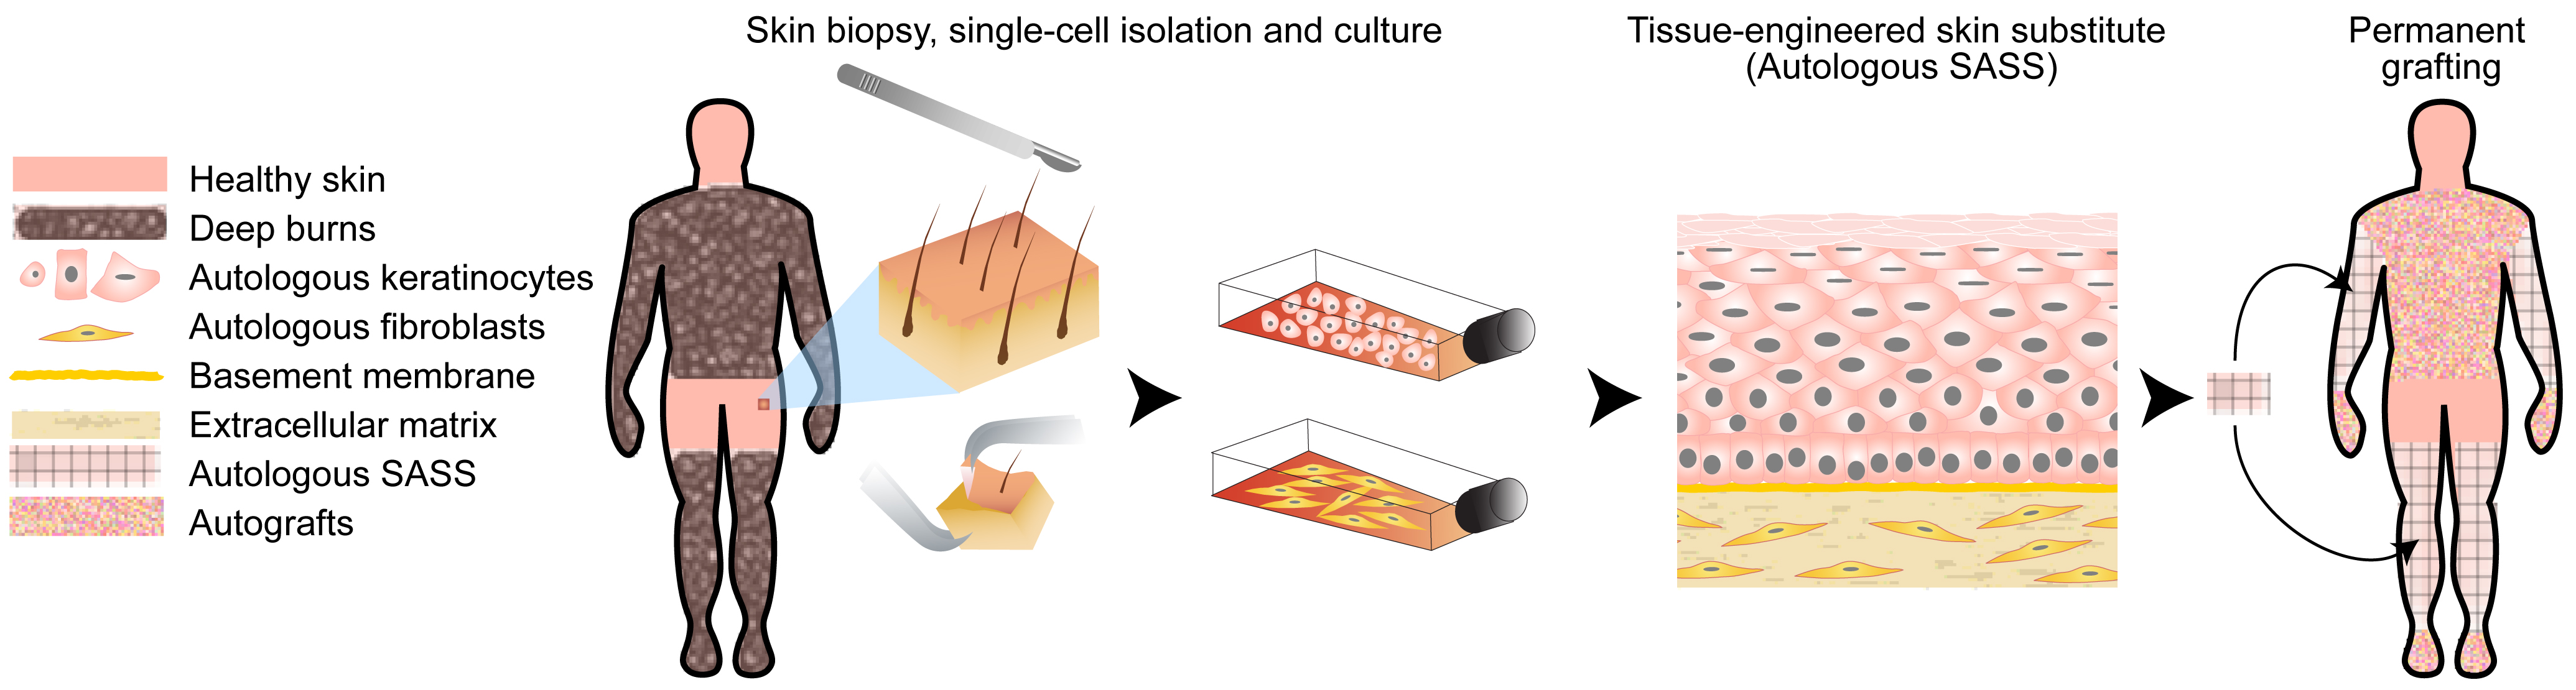 Skin tissue regeneration for burn injury